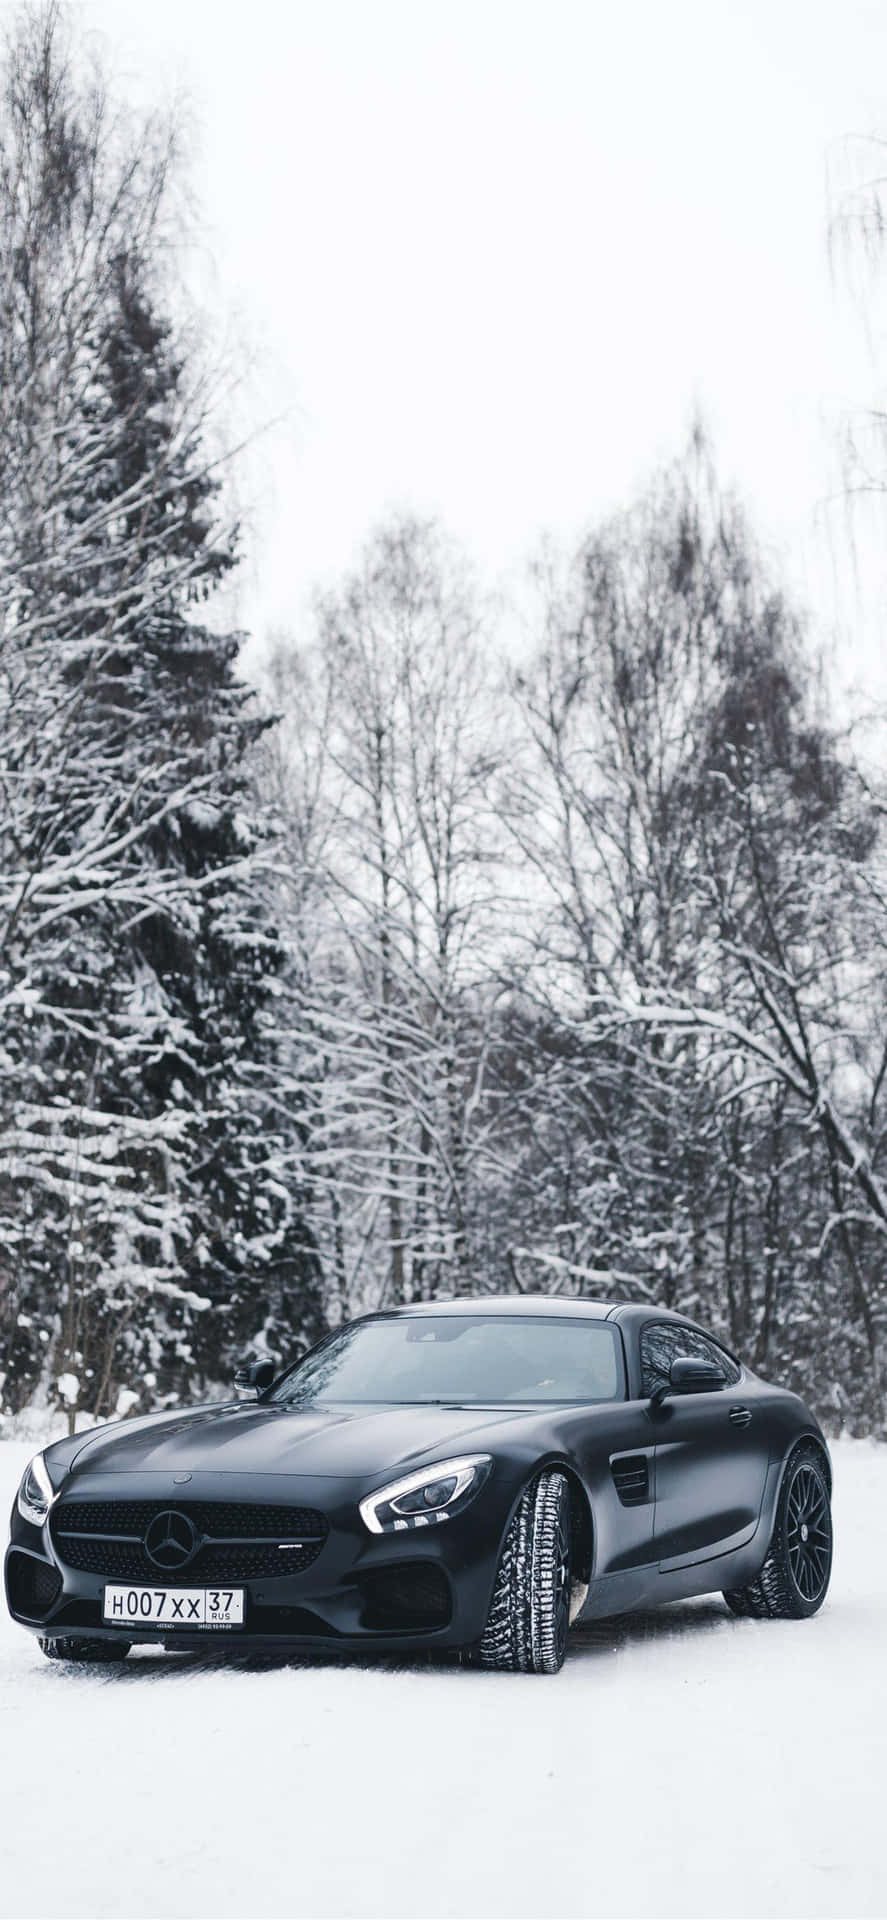 Snehvide Sort GT Iphone Xs Mercedes Amg Baggrund